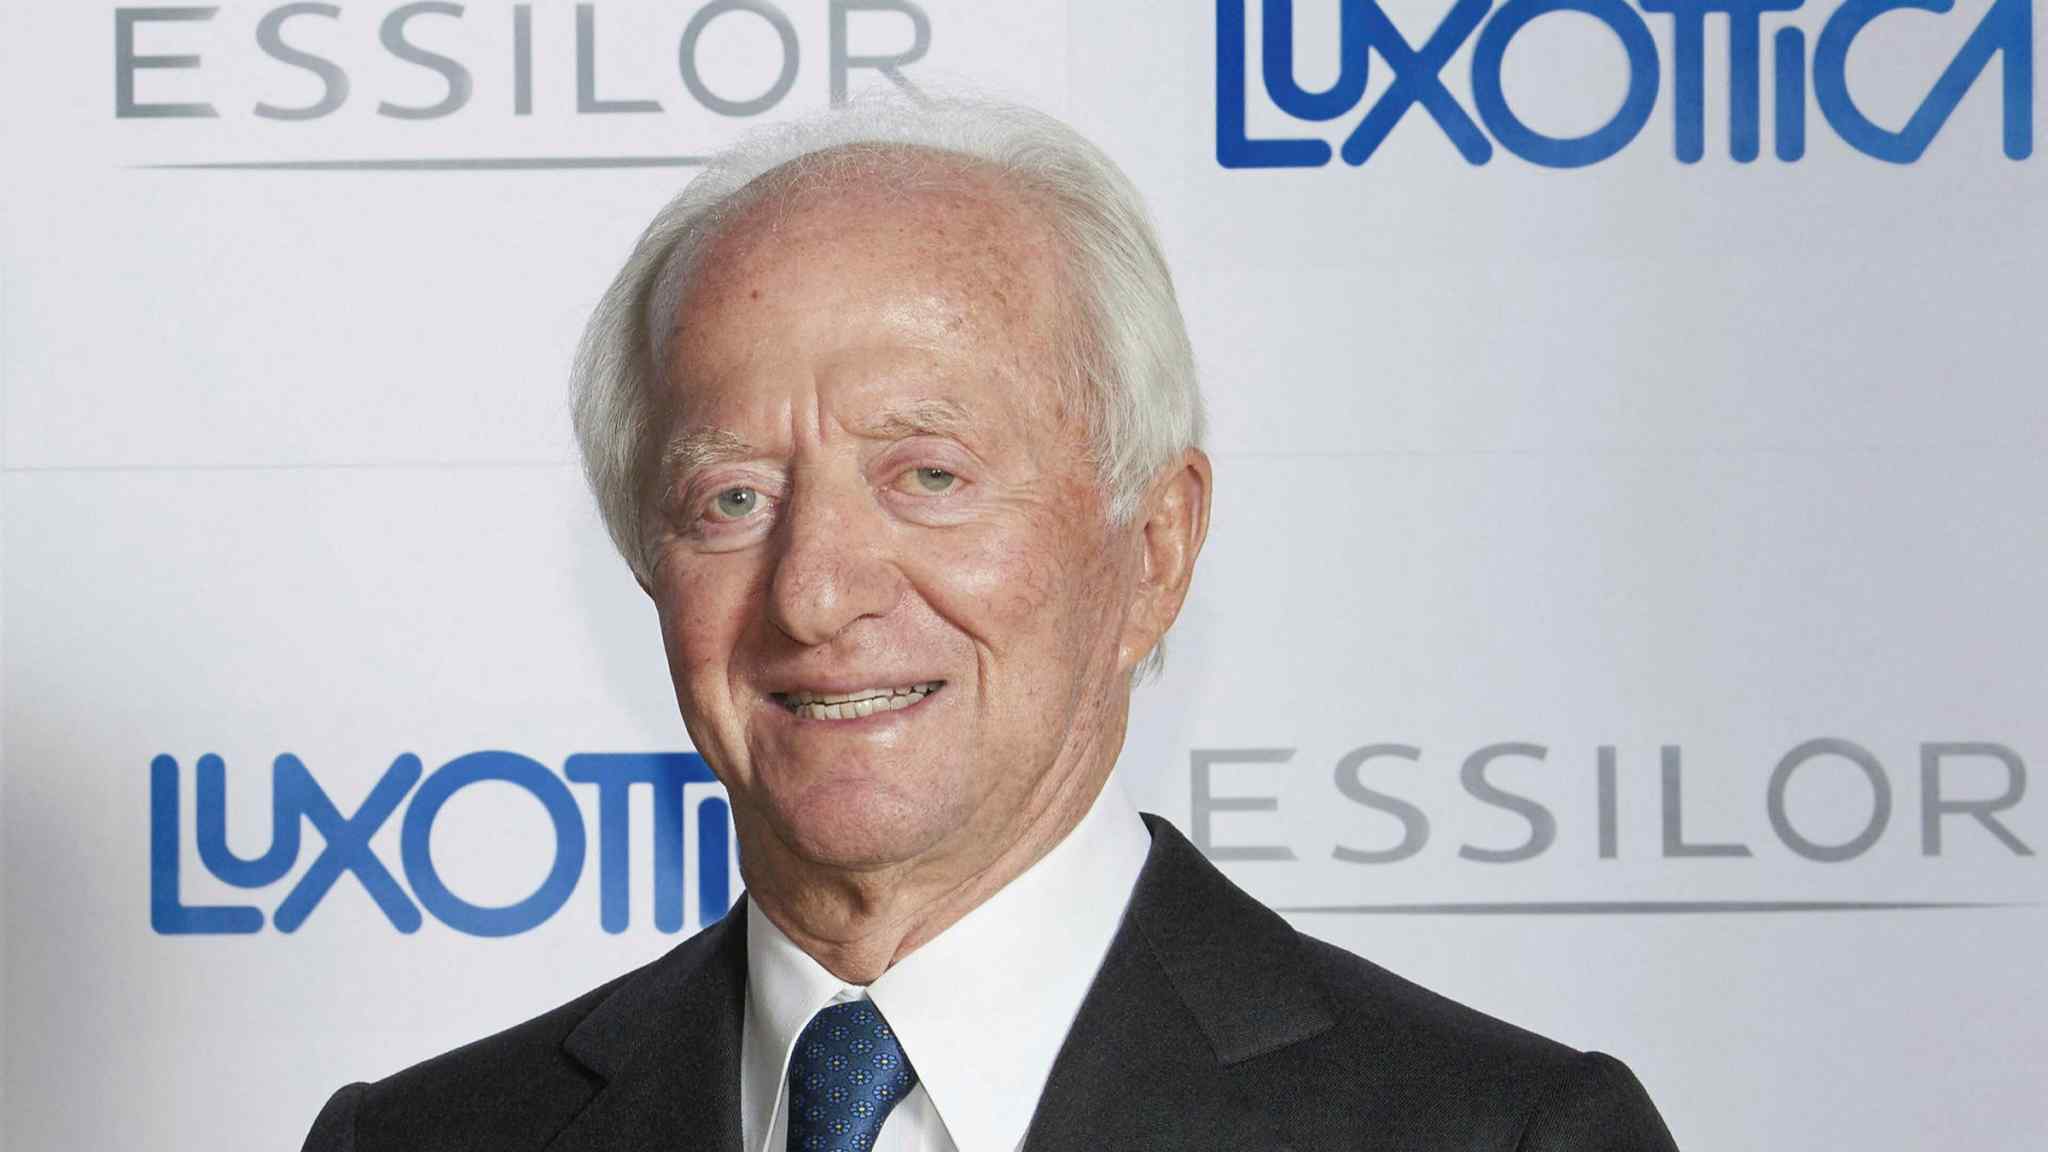 Live news updates: Luxottica founder Leonardo Del Vecchio dies aged 87